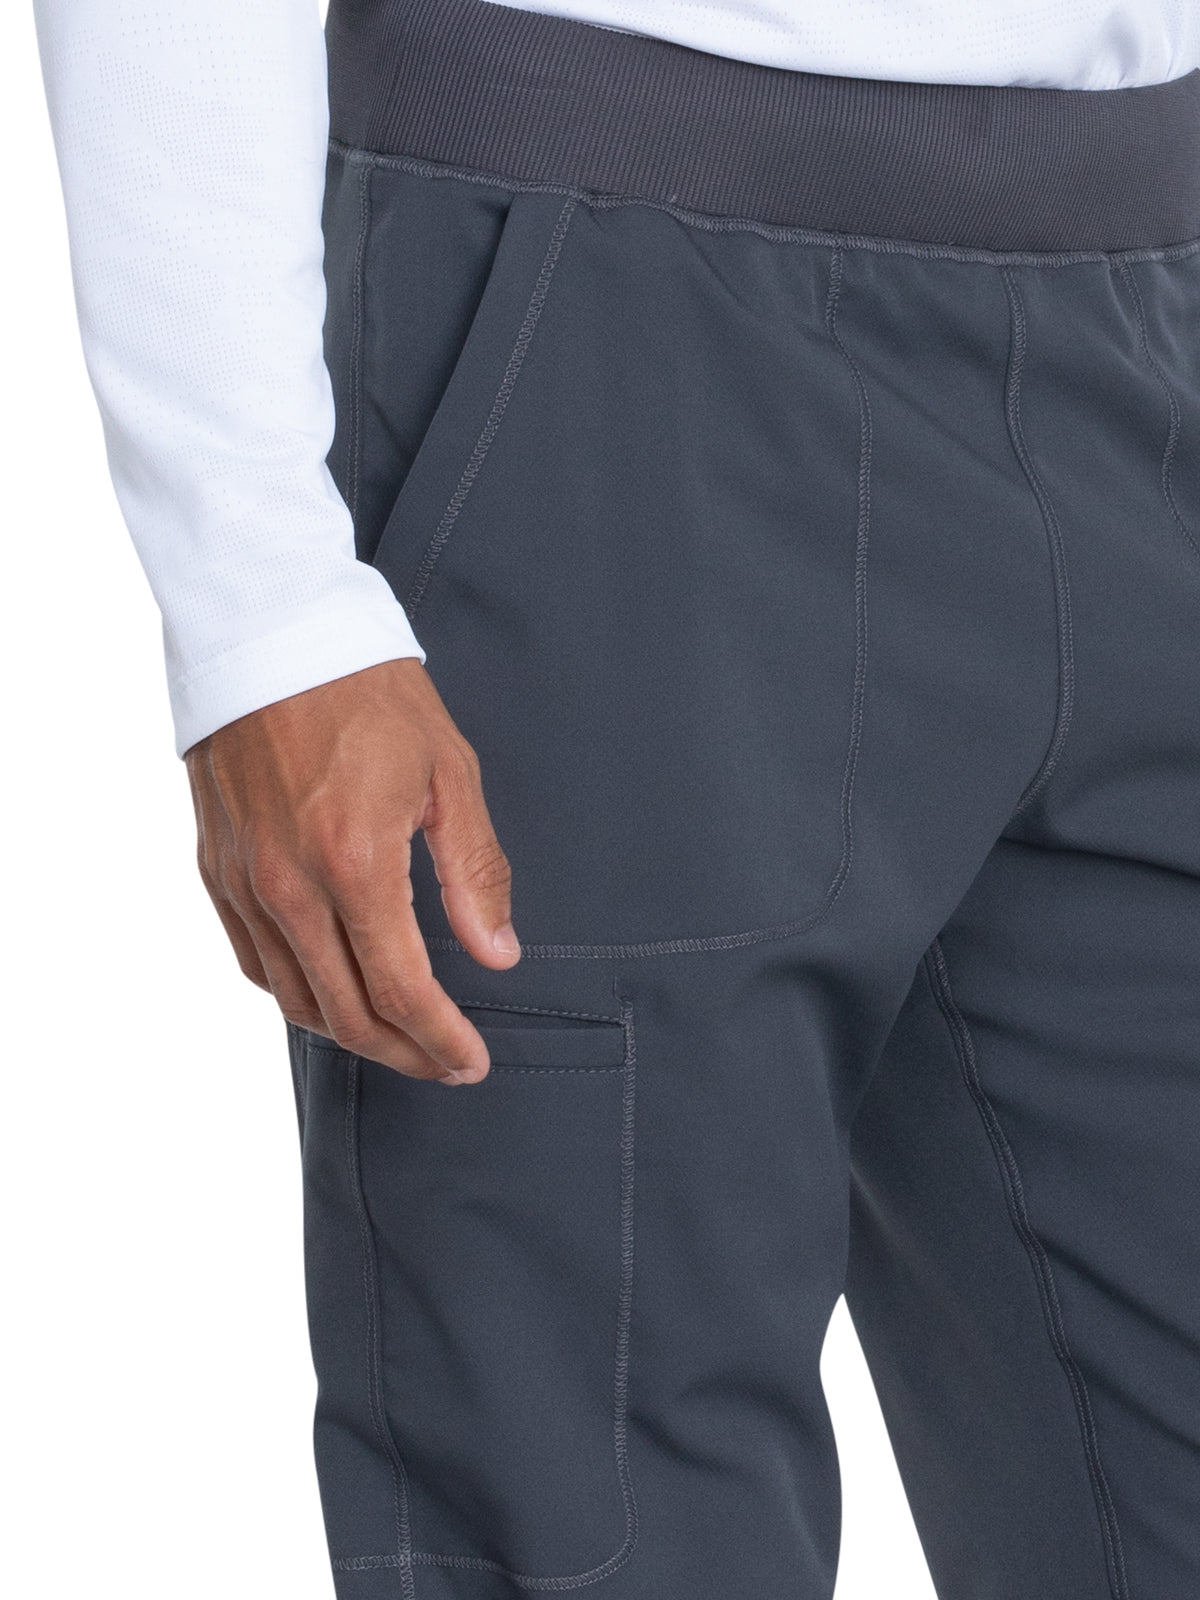 Men's 4-Pocket Tapered Leg Jogger Pant - DK040 - Pewter